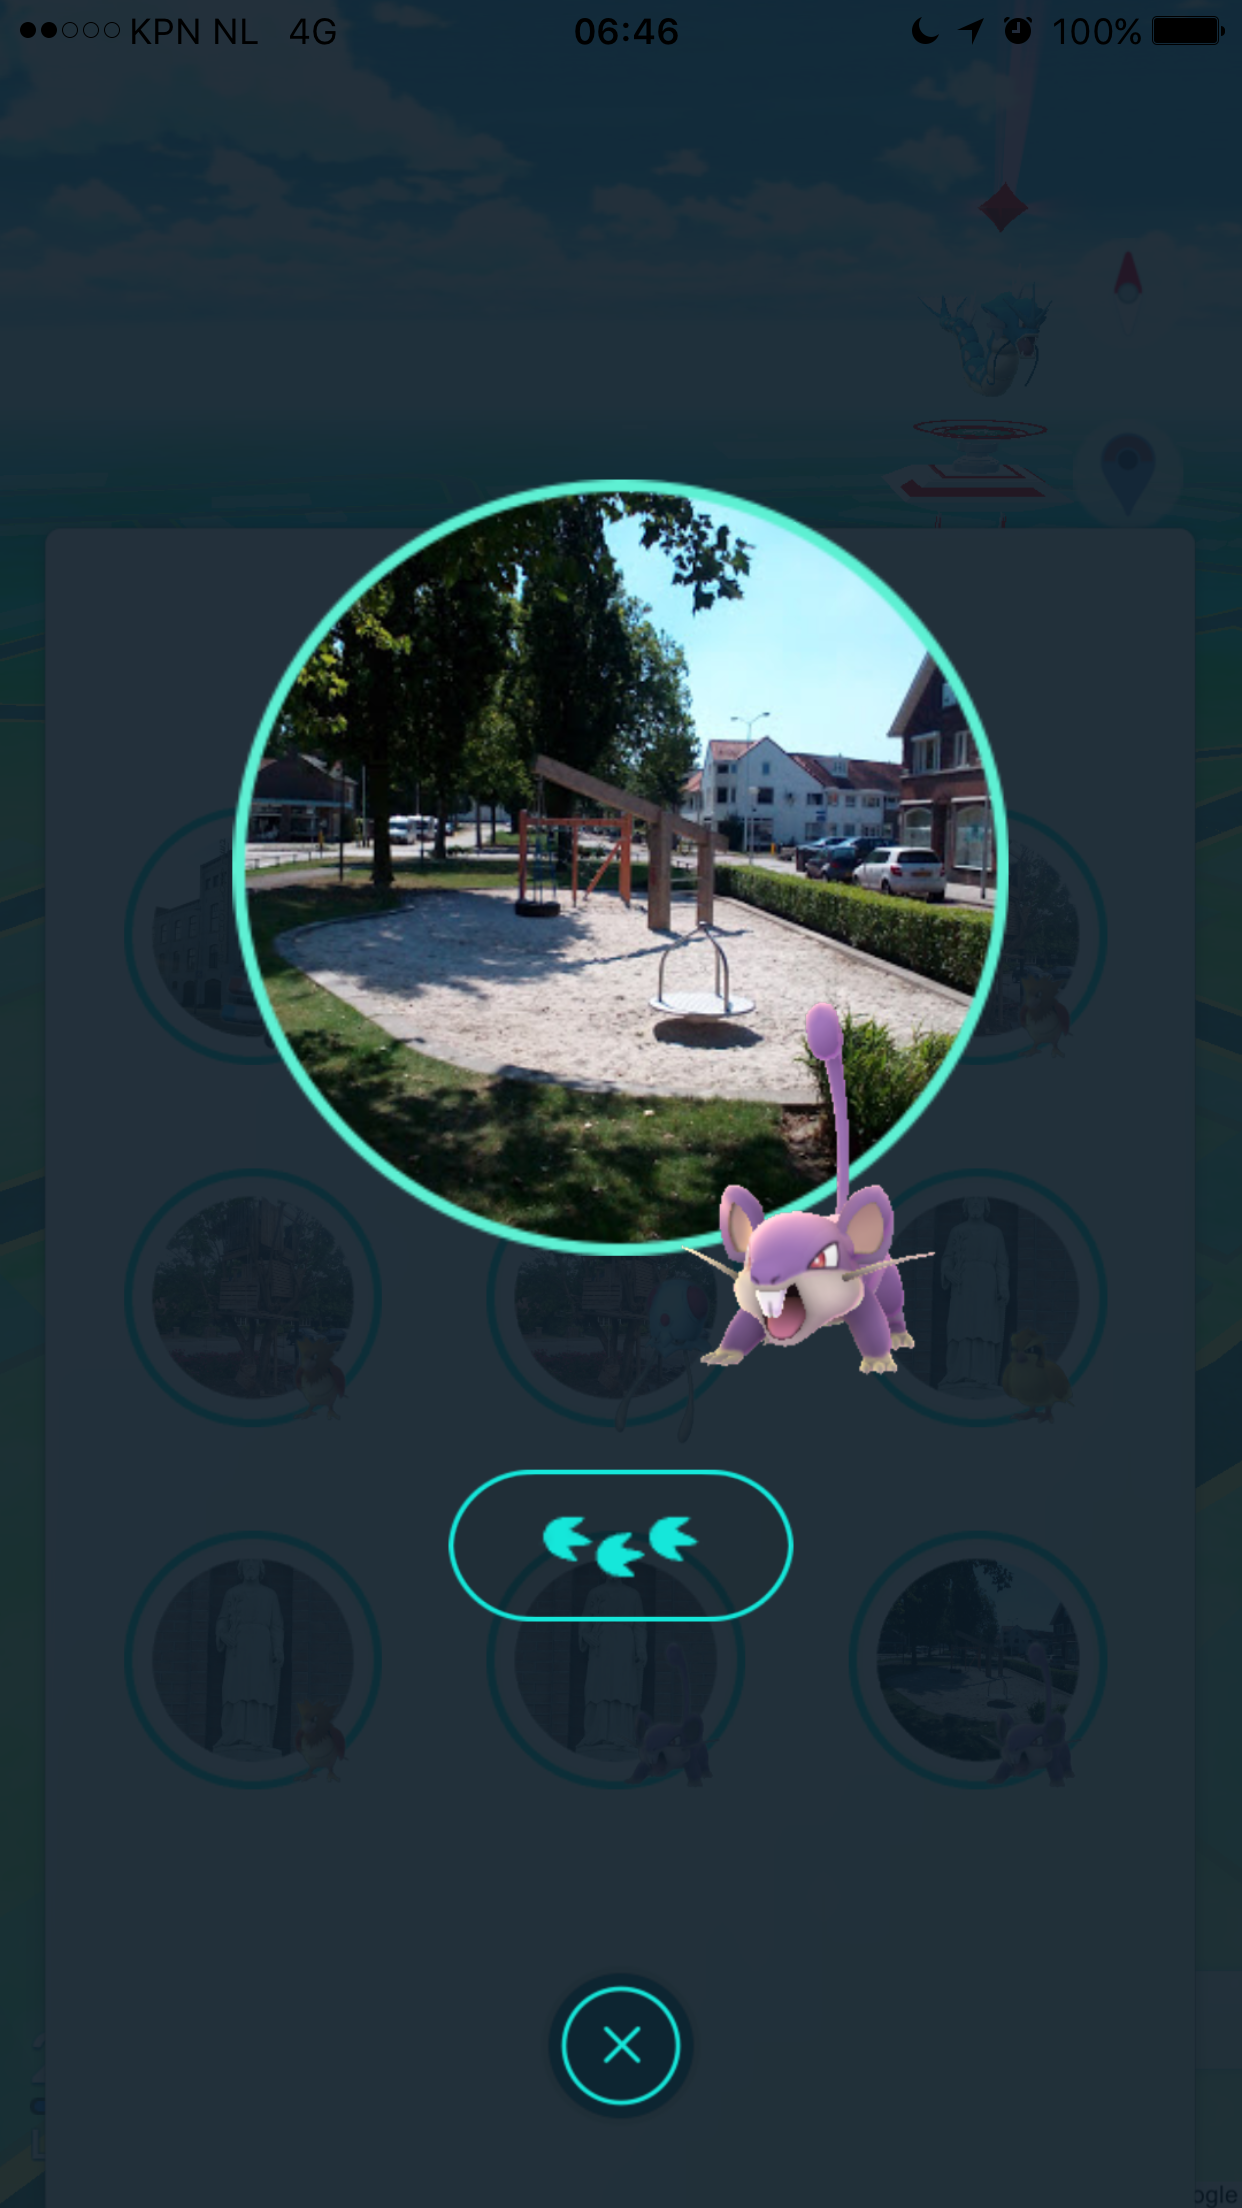 Pokémon Go nearby functie beschikbaar in Nederland